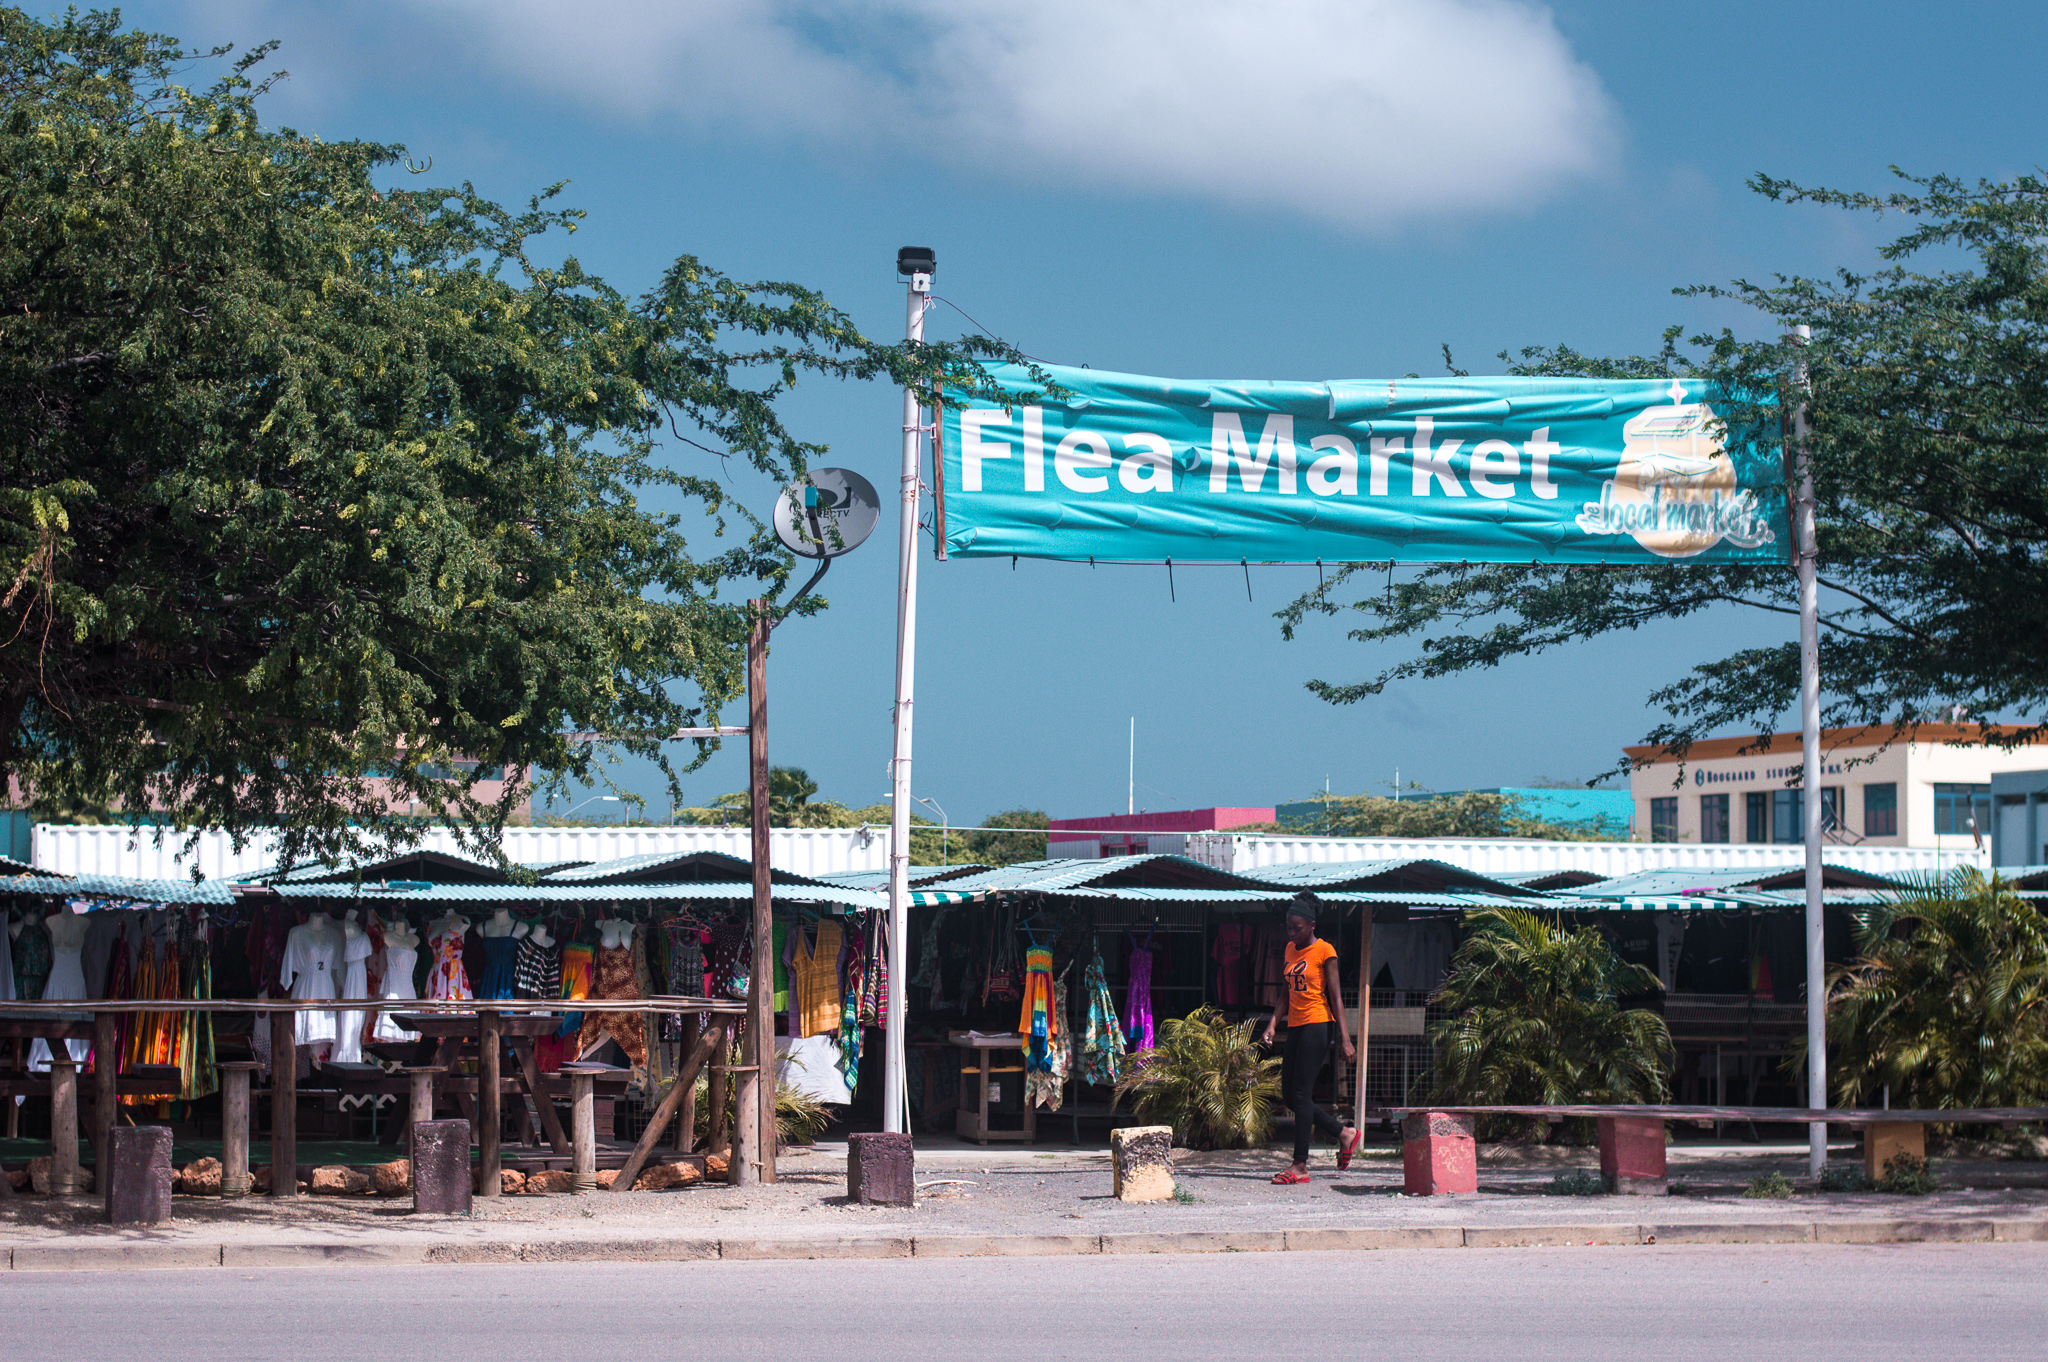 Local flea market in downtown Aruba